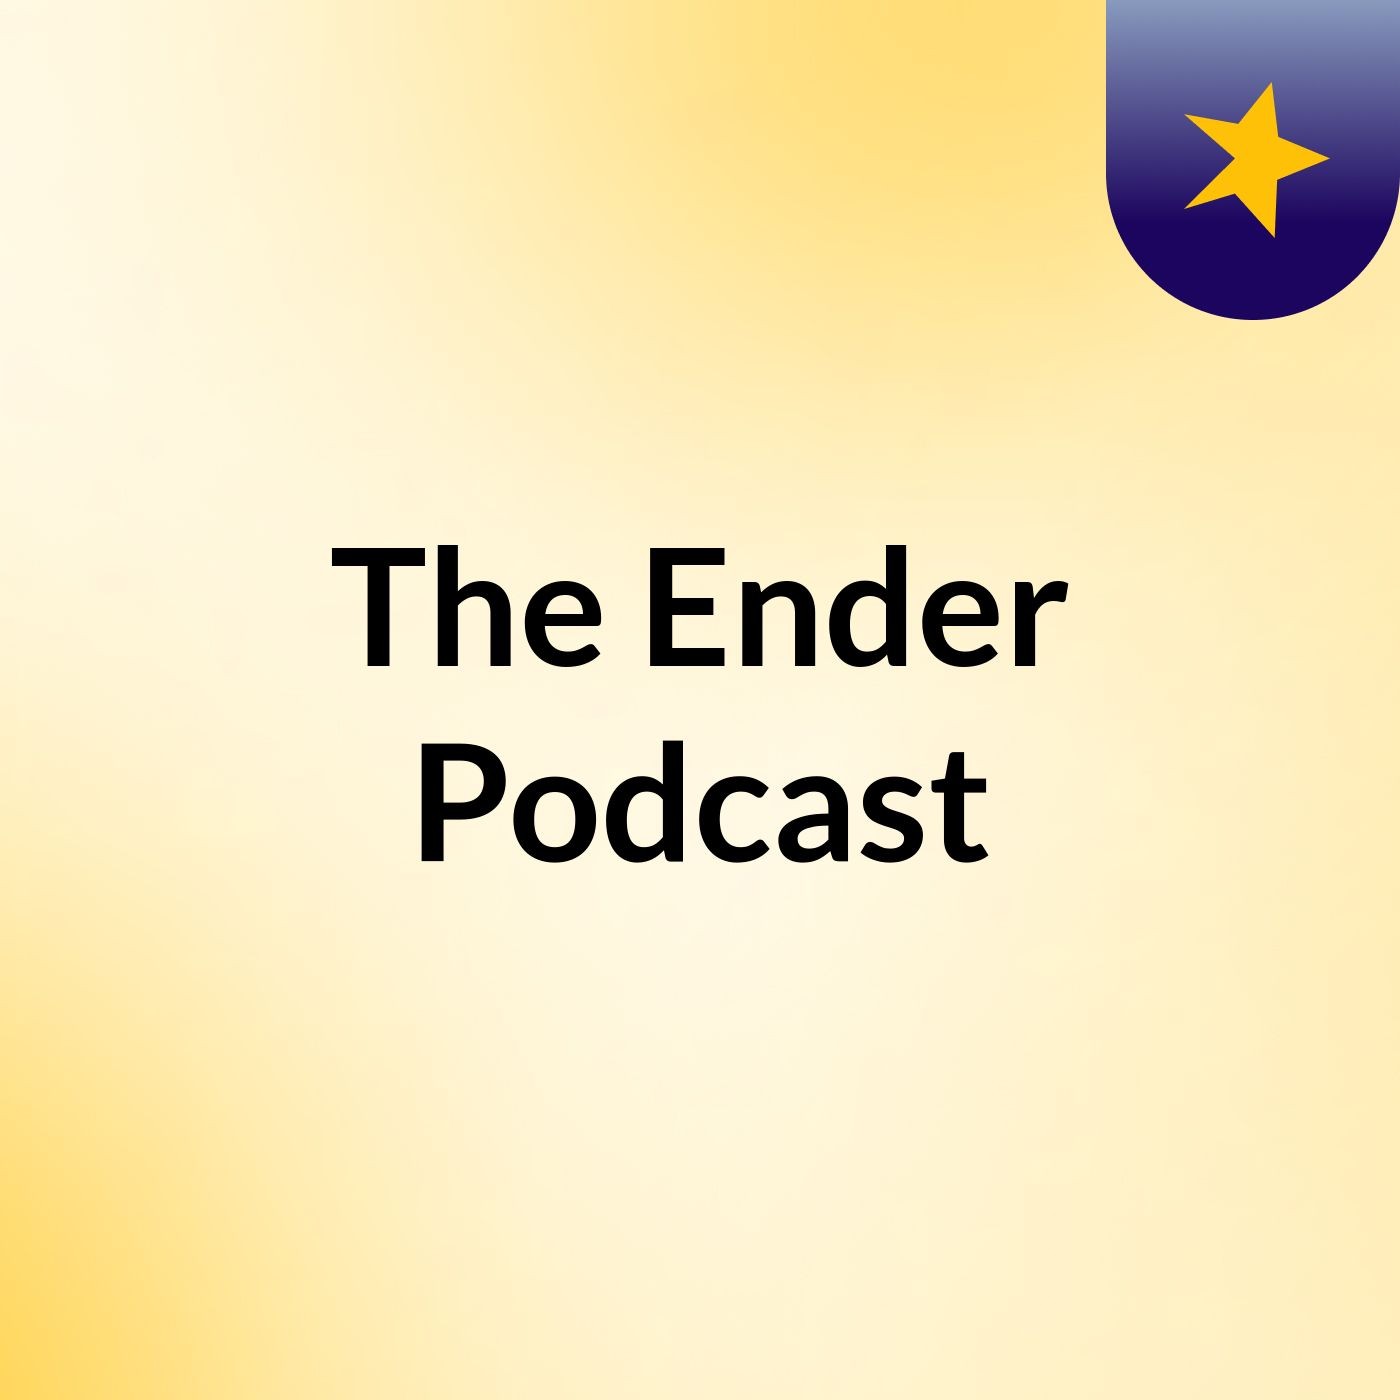 The Ender Podcast